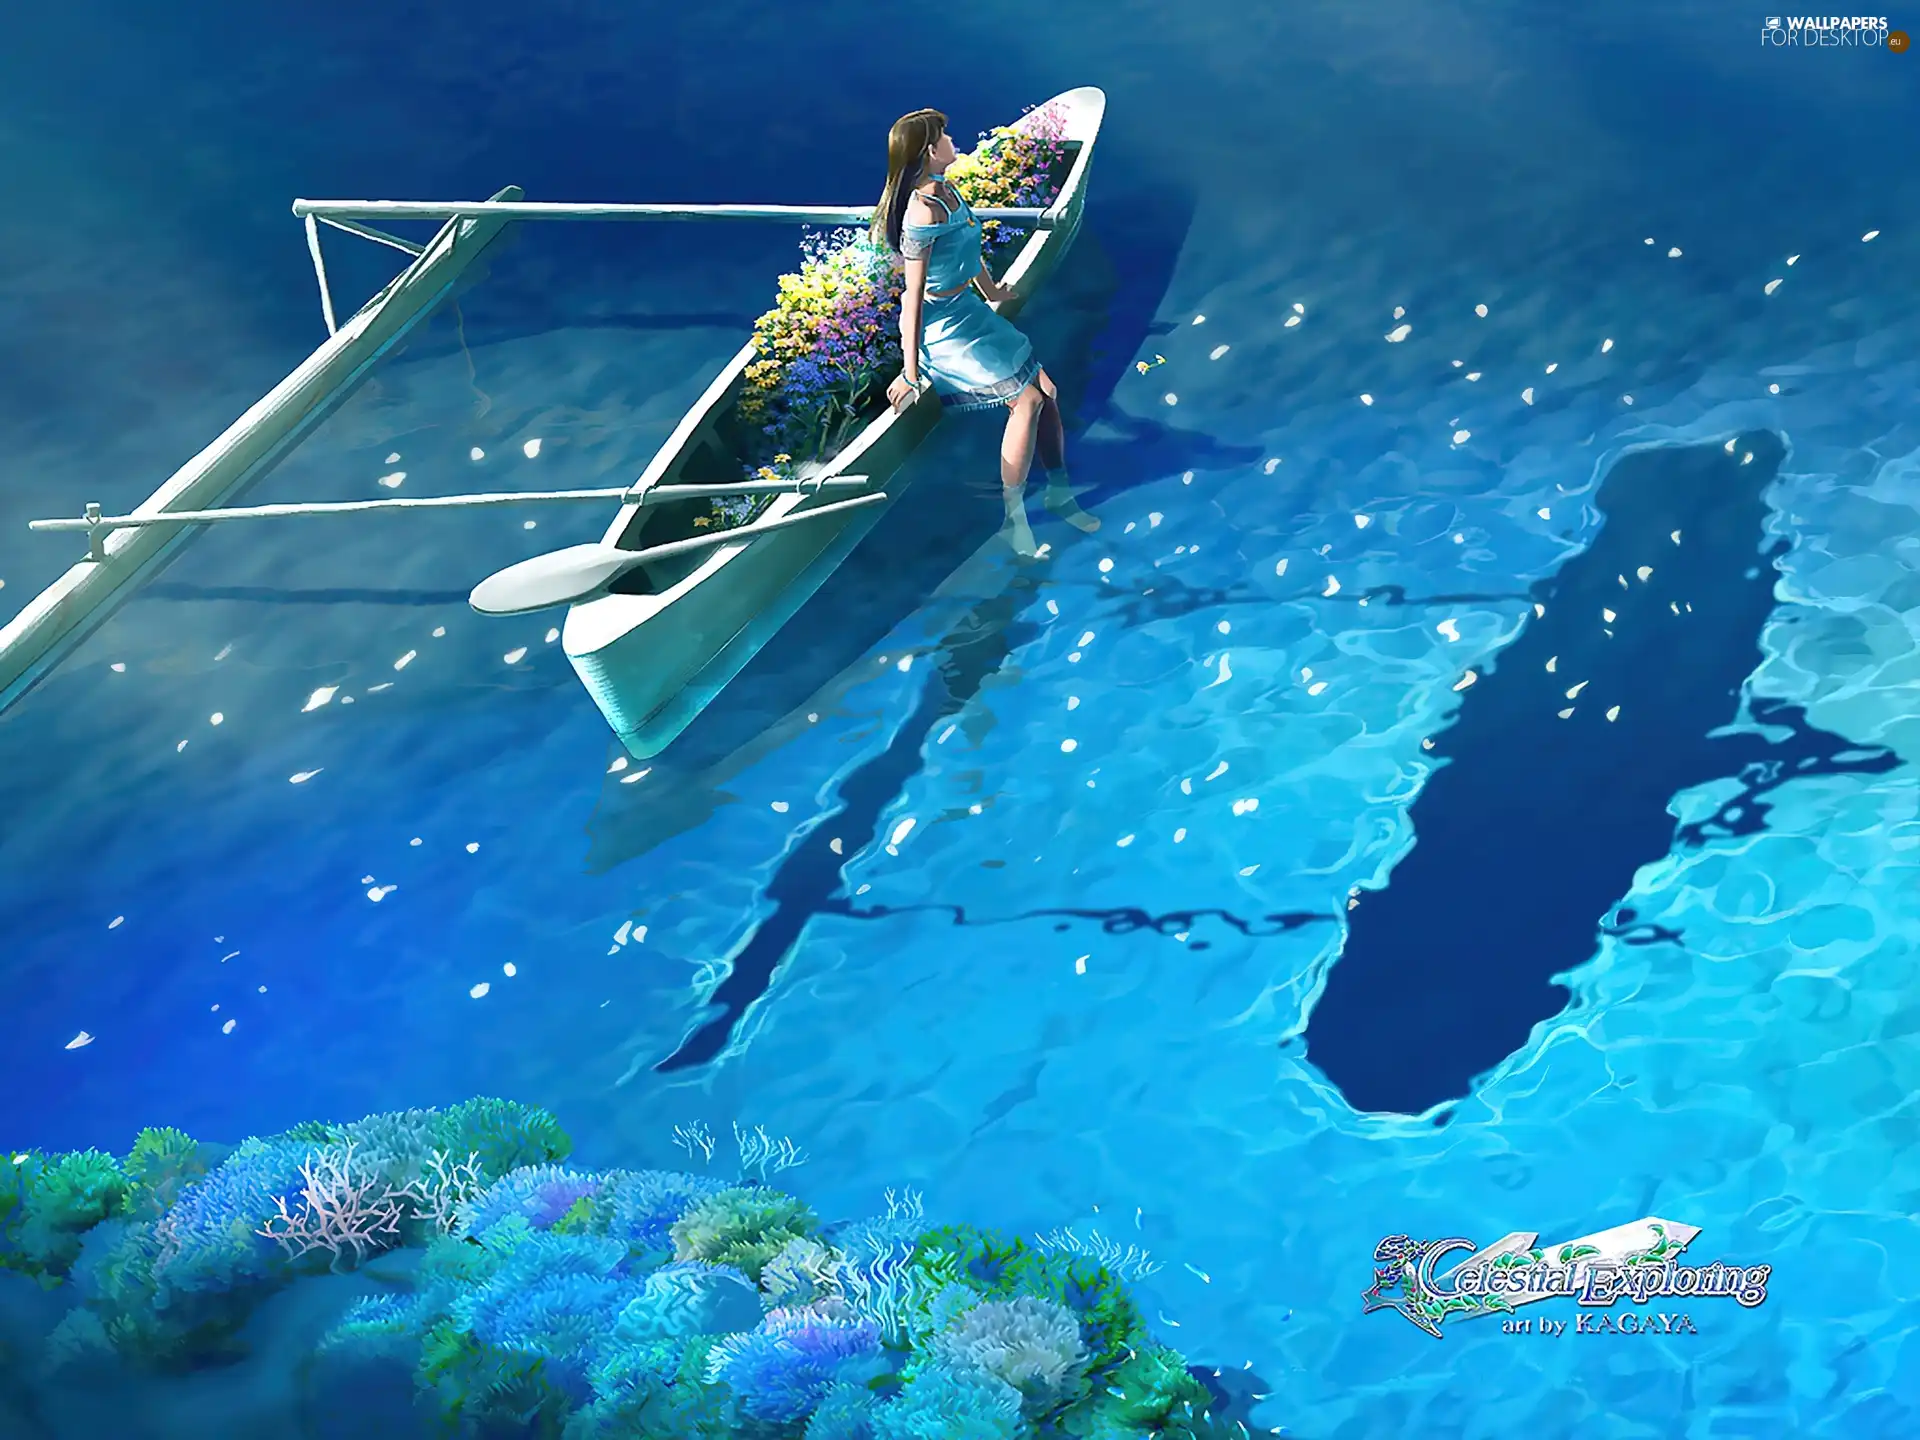 Flowers, shadow, Kagaya, Boat, graphics